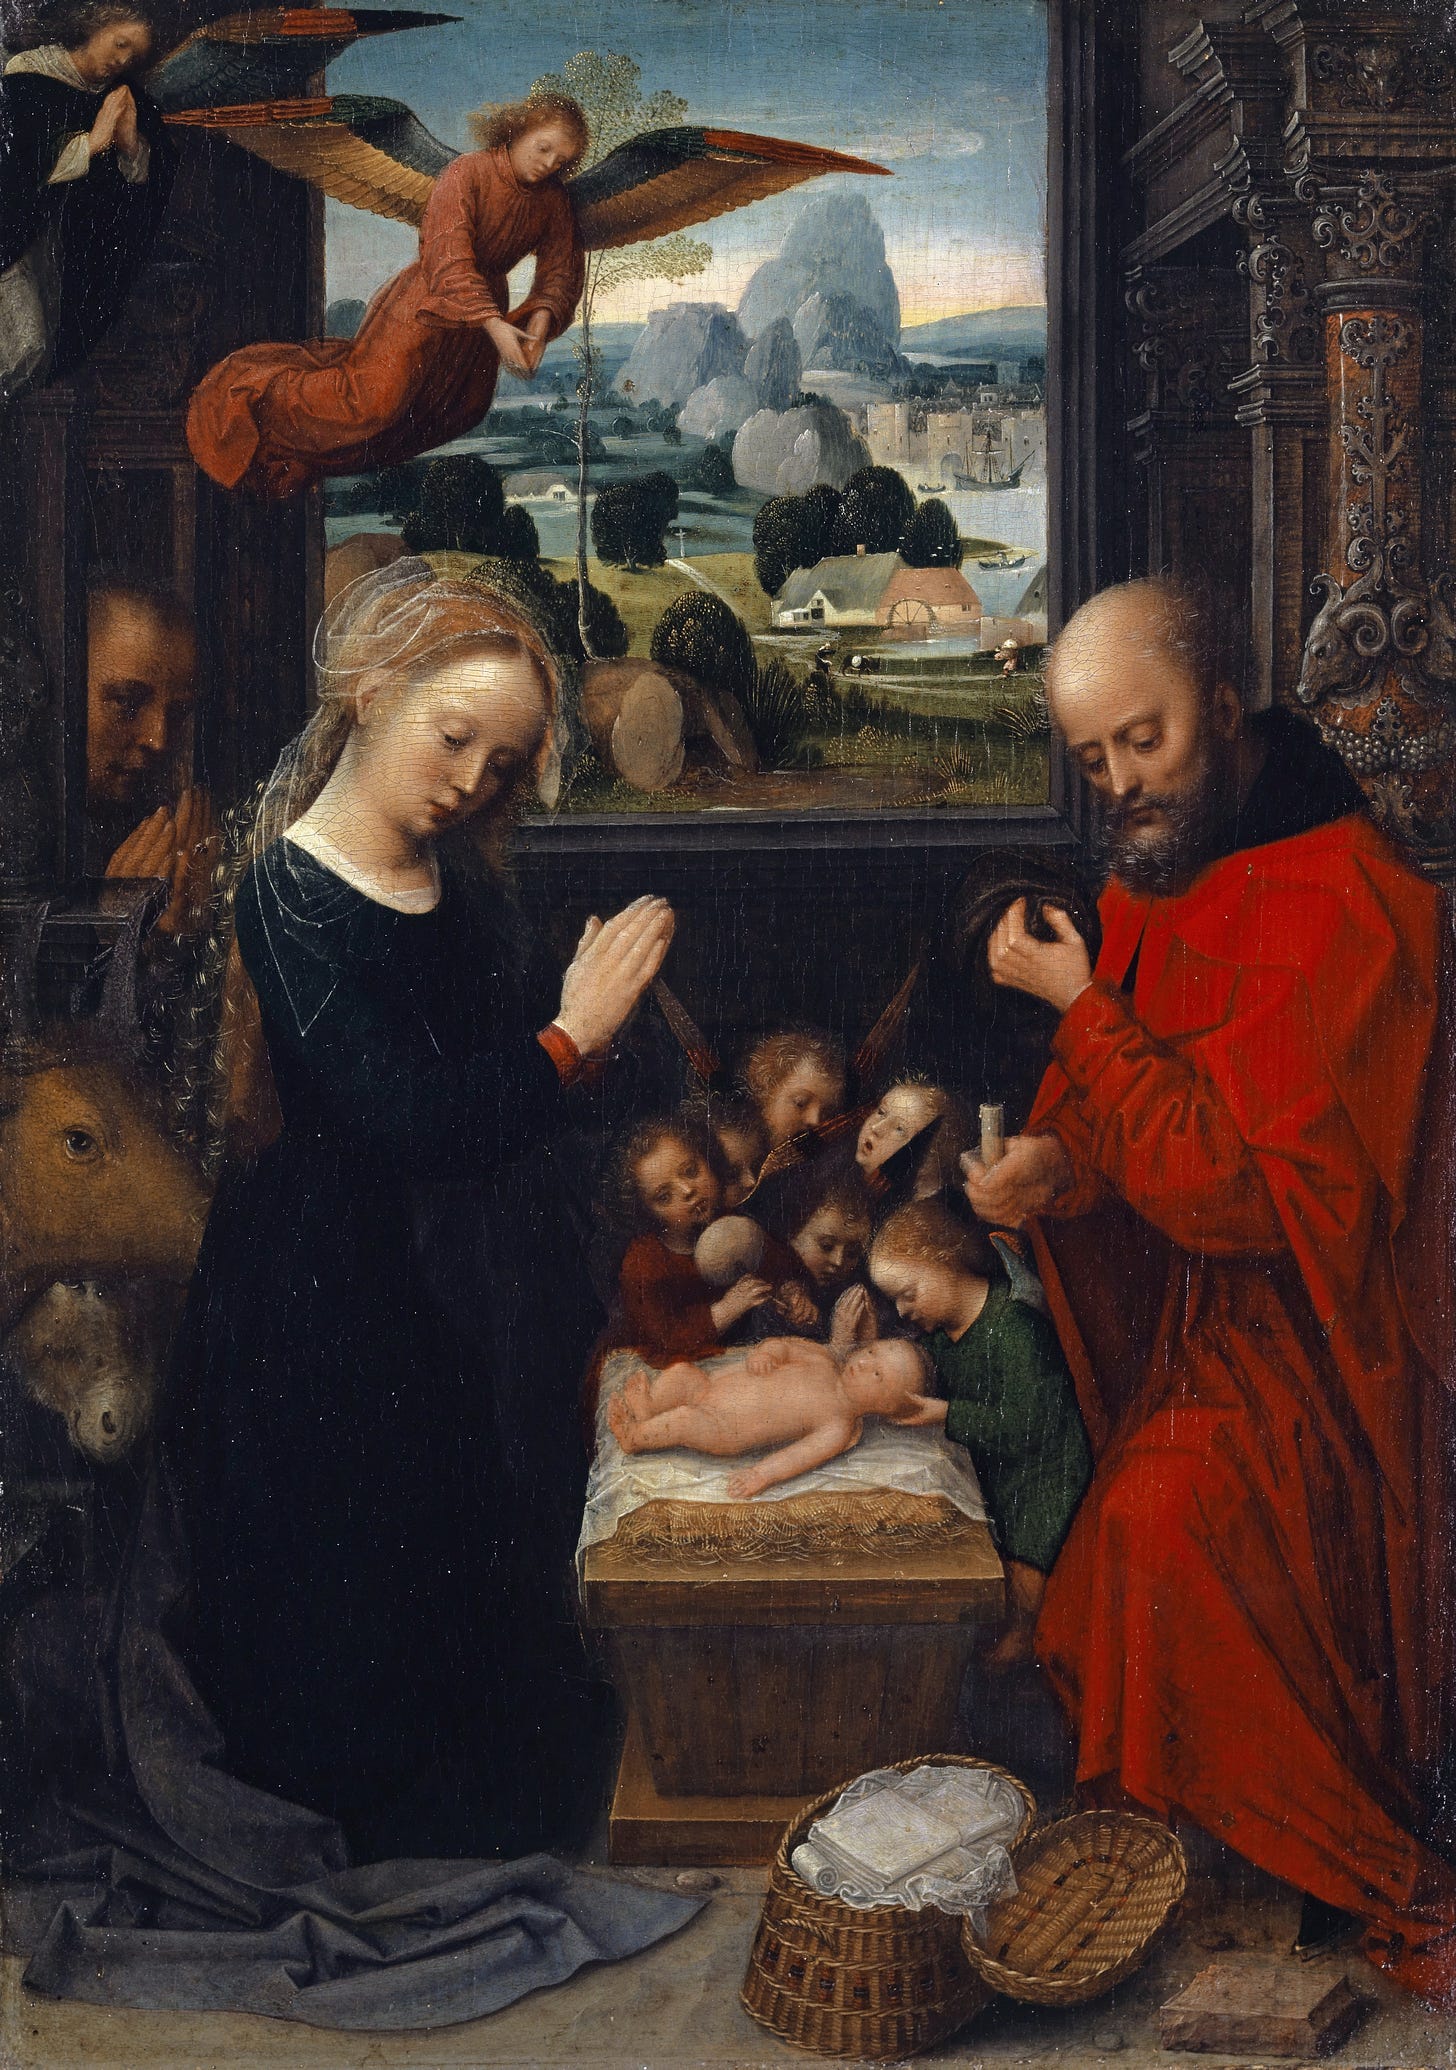 The Nativity (1520) by Adriaen Isenbrant (Flemish, 1510-1551)